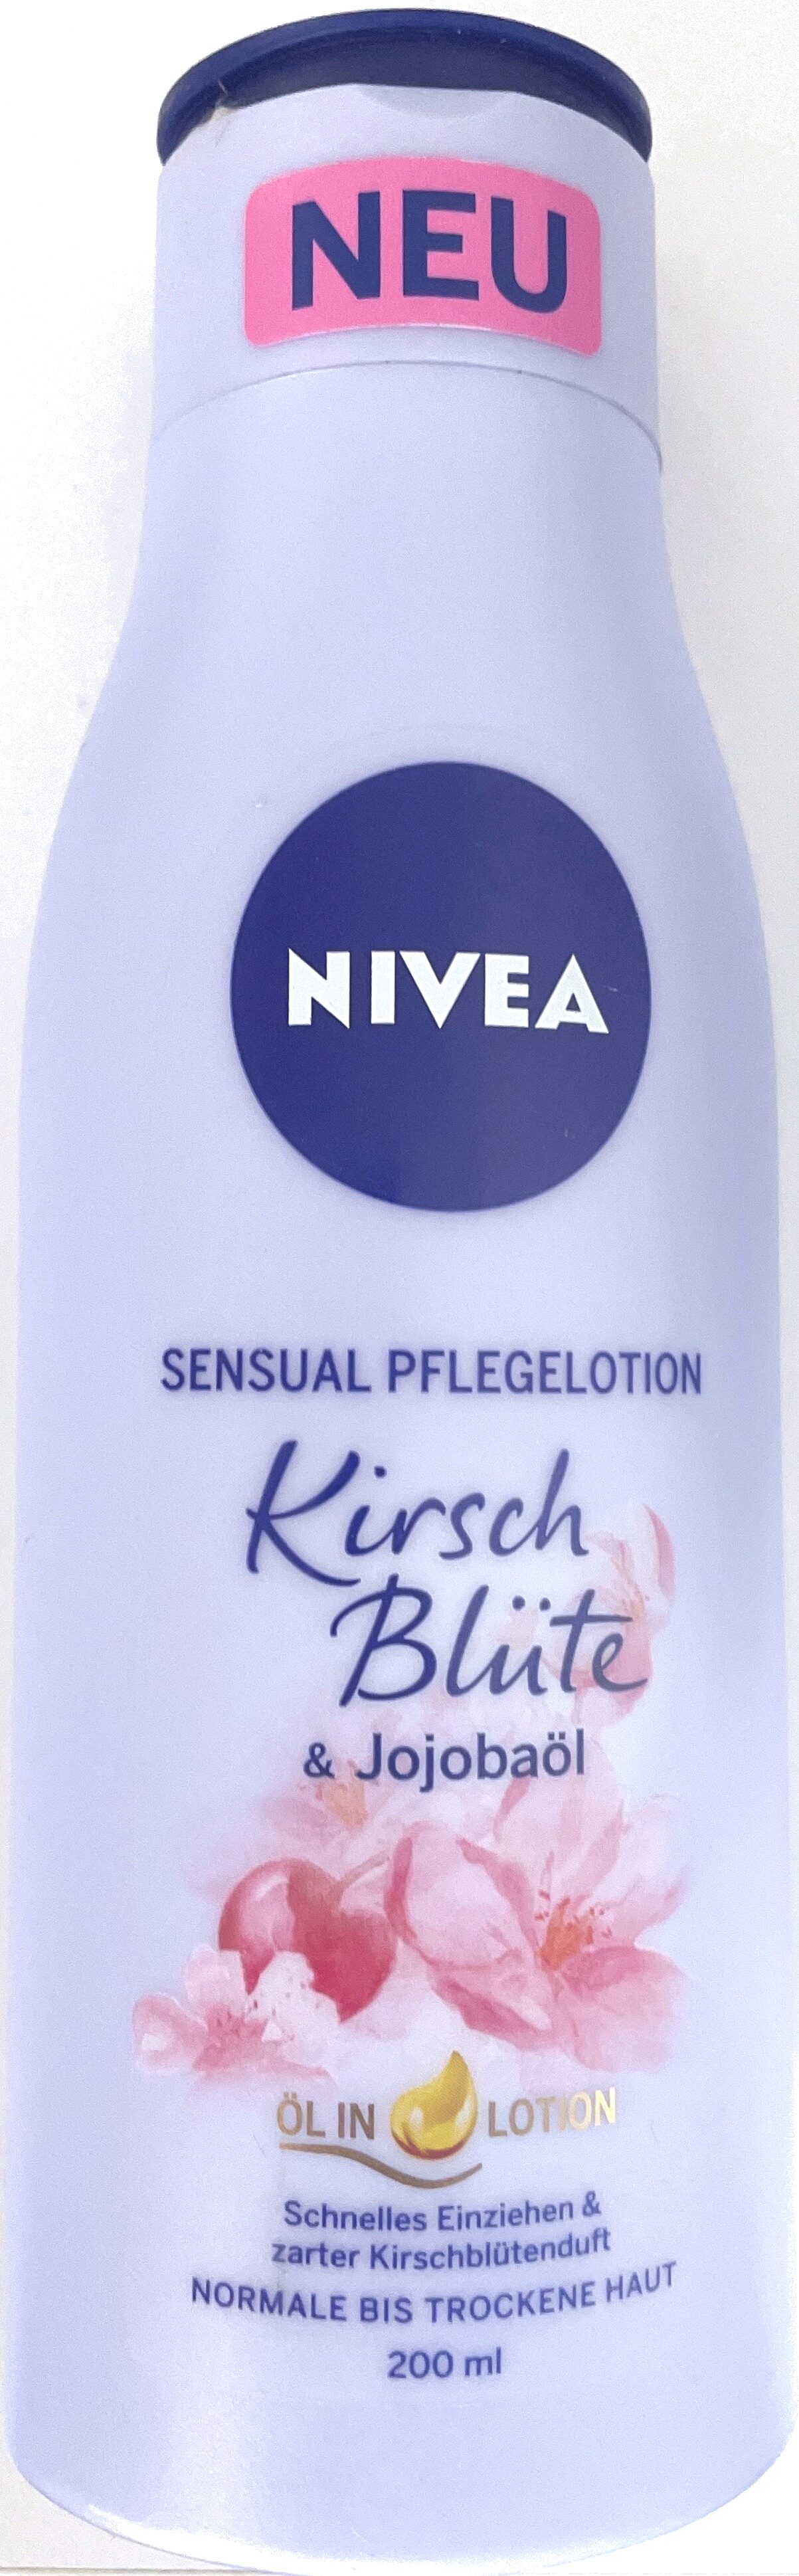 Sensual Pflegelotion Kirsch Blüte - Product - de